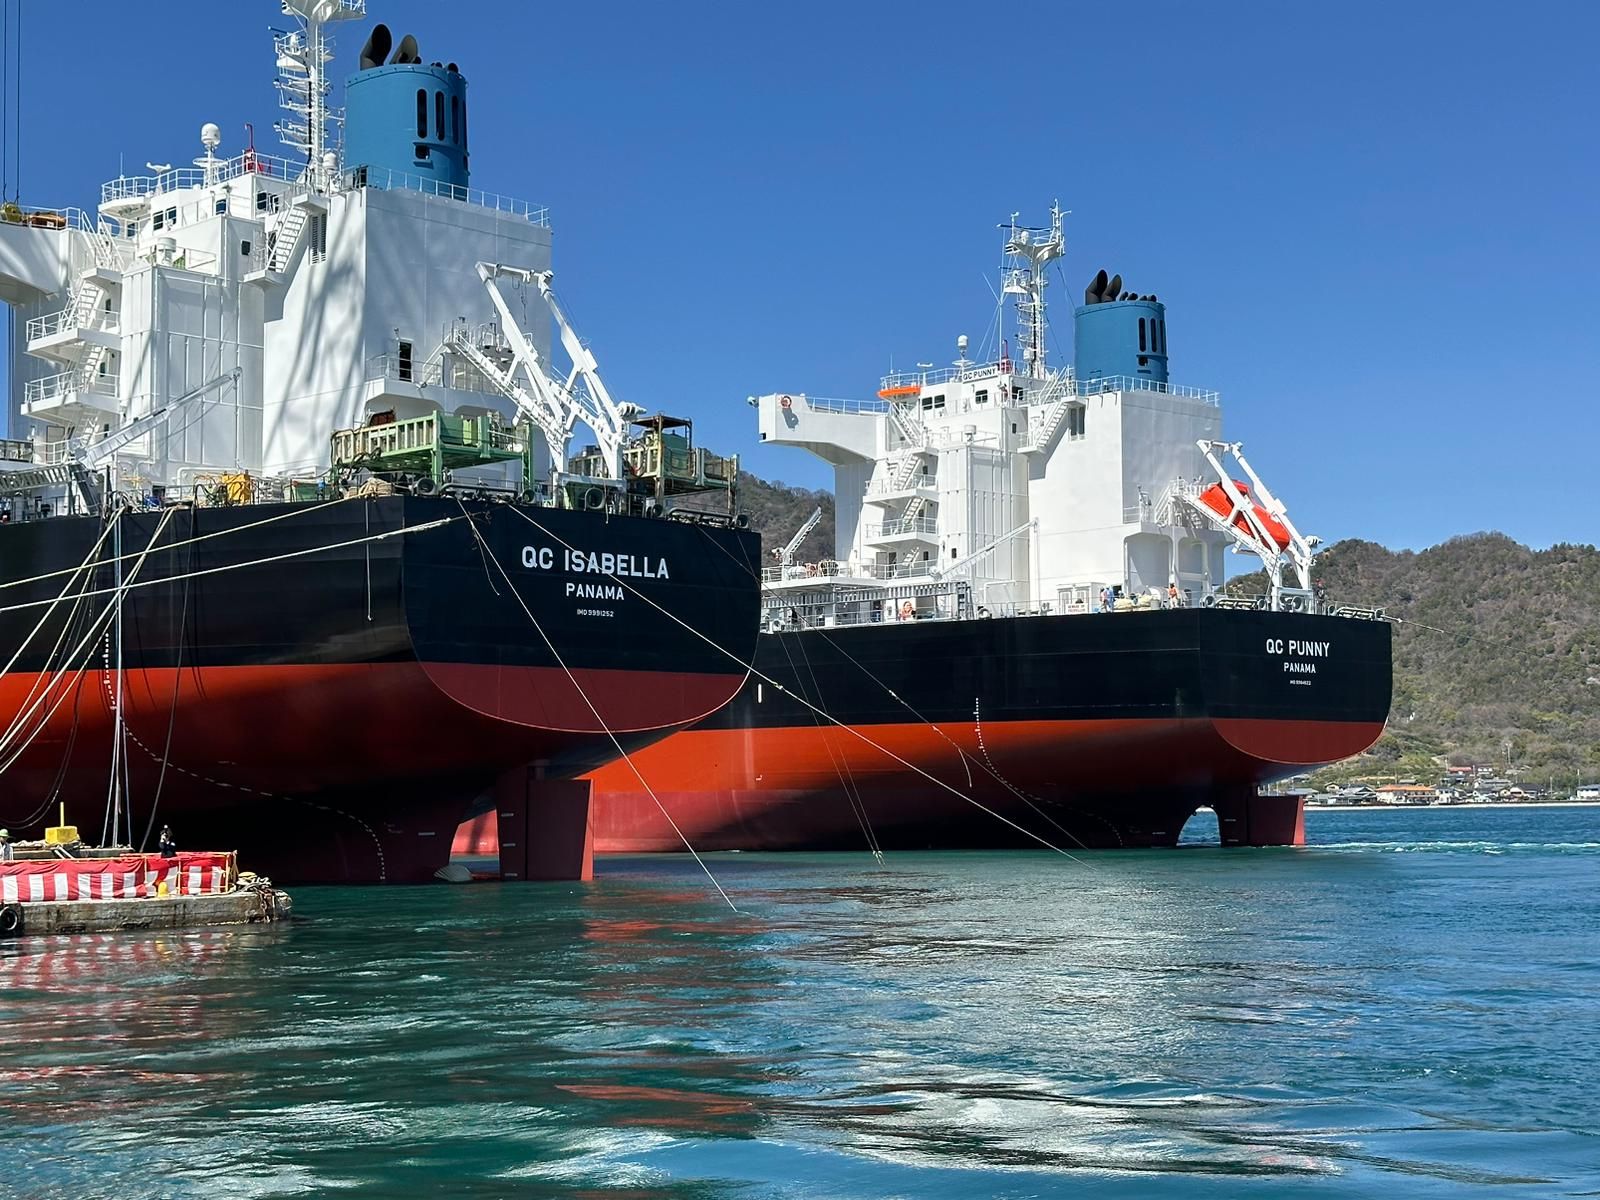 Quadra Commosities ultramax charter vessels